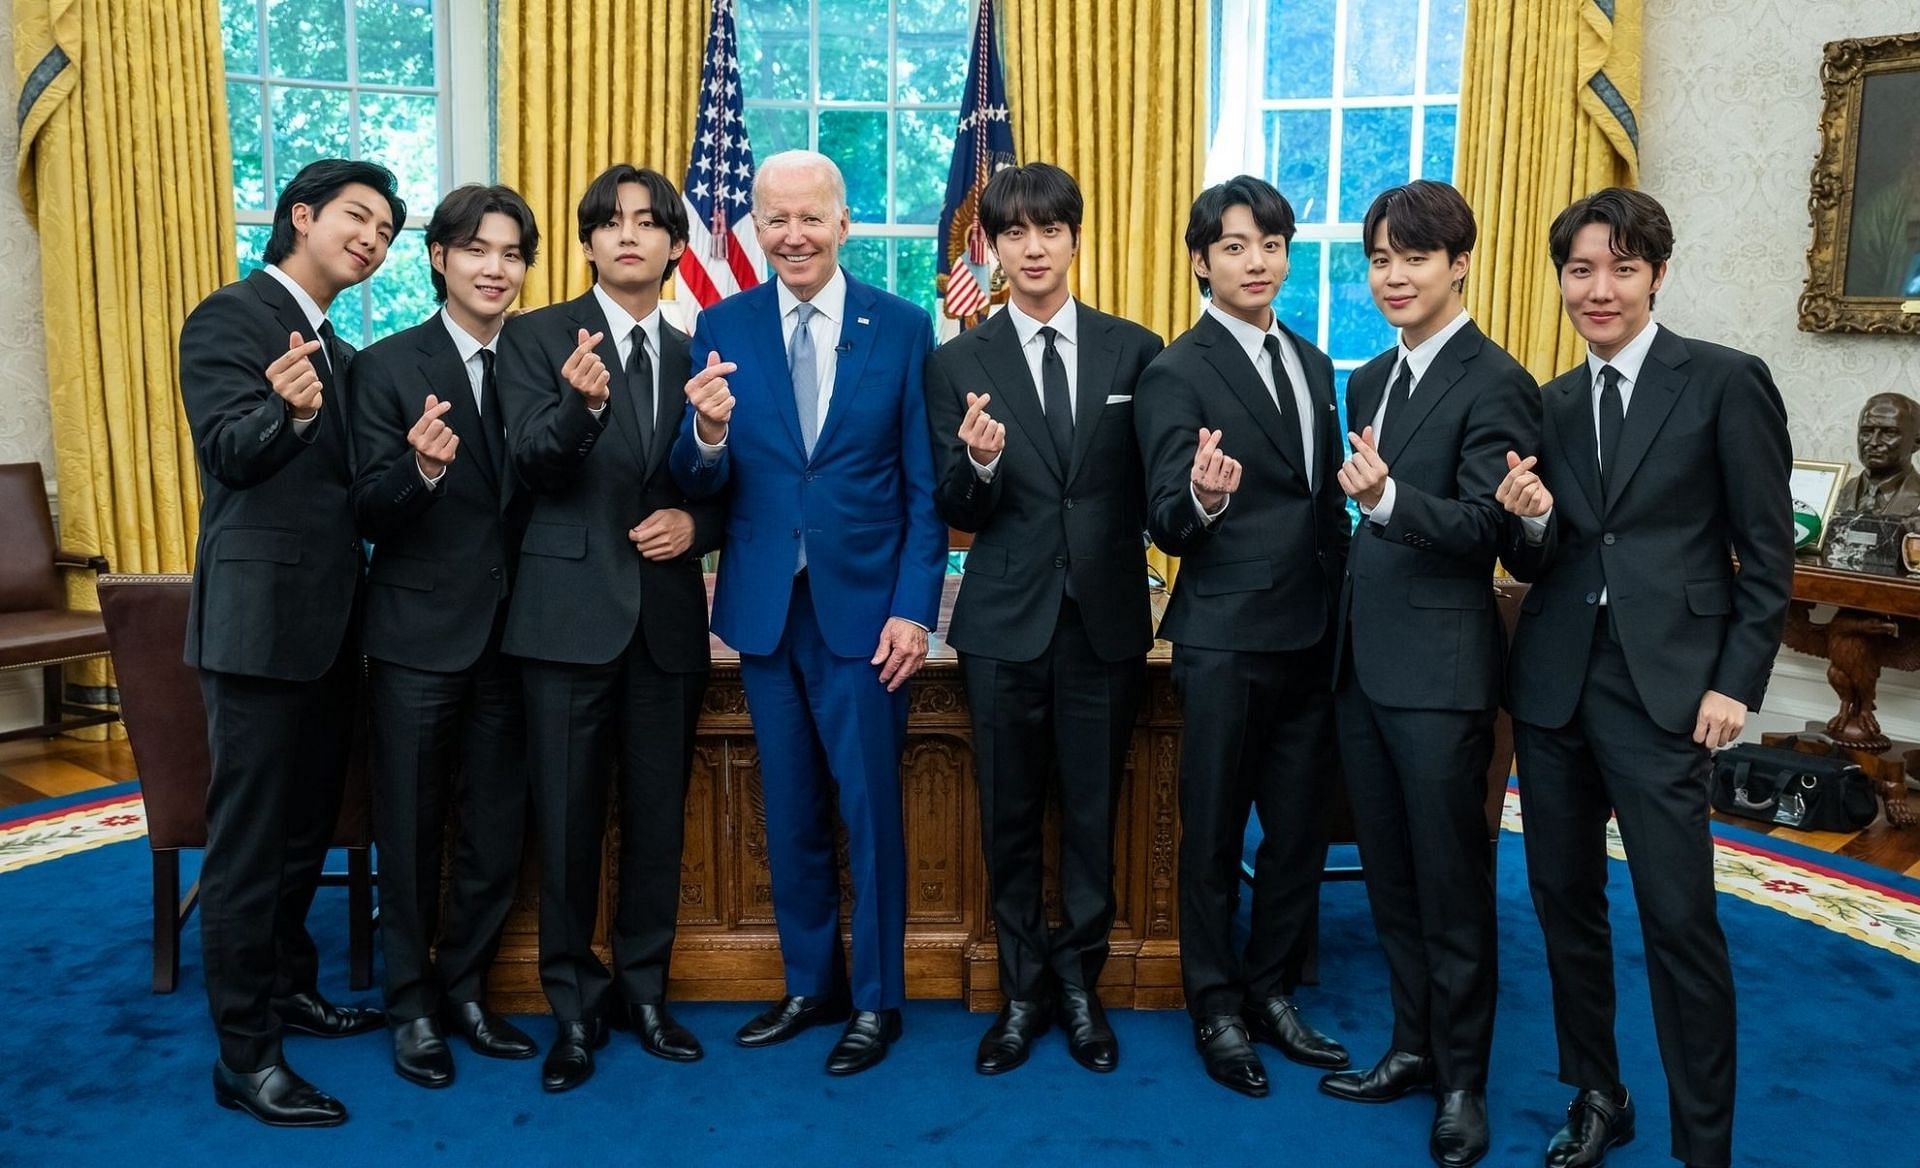 BTS with President Biden at the White House (Image via @bts_bighit/Twitter)